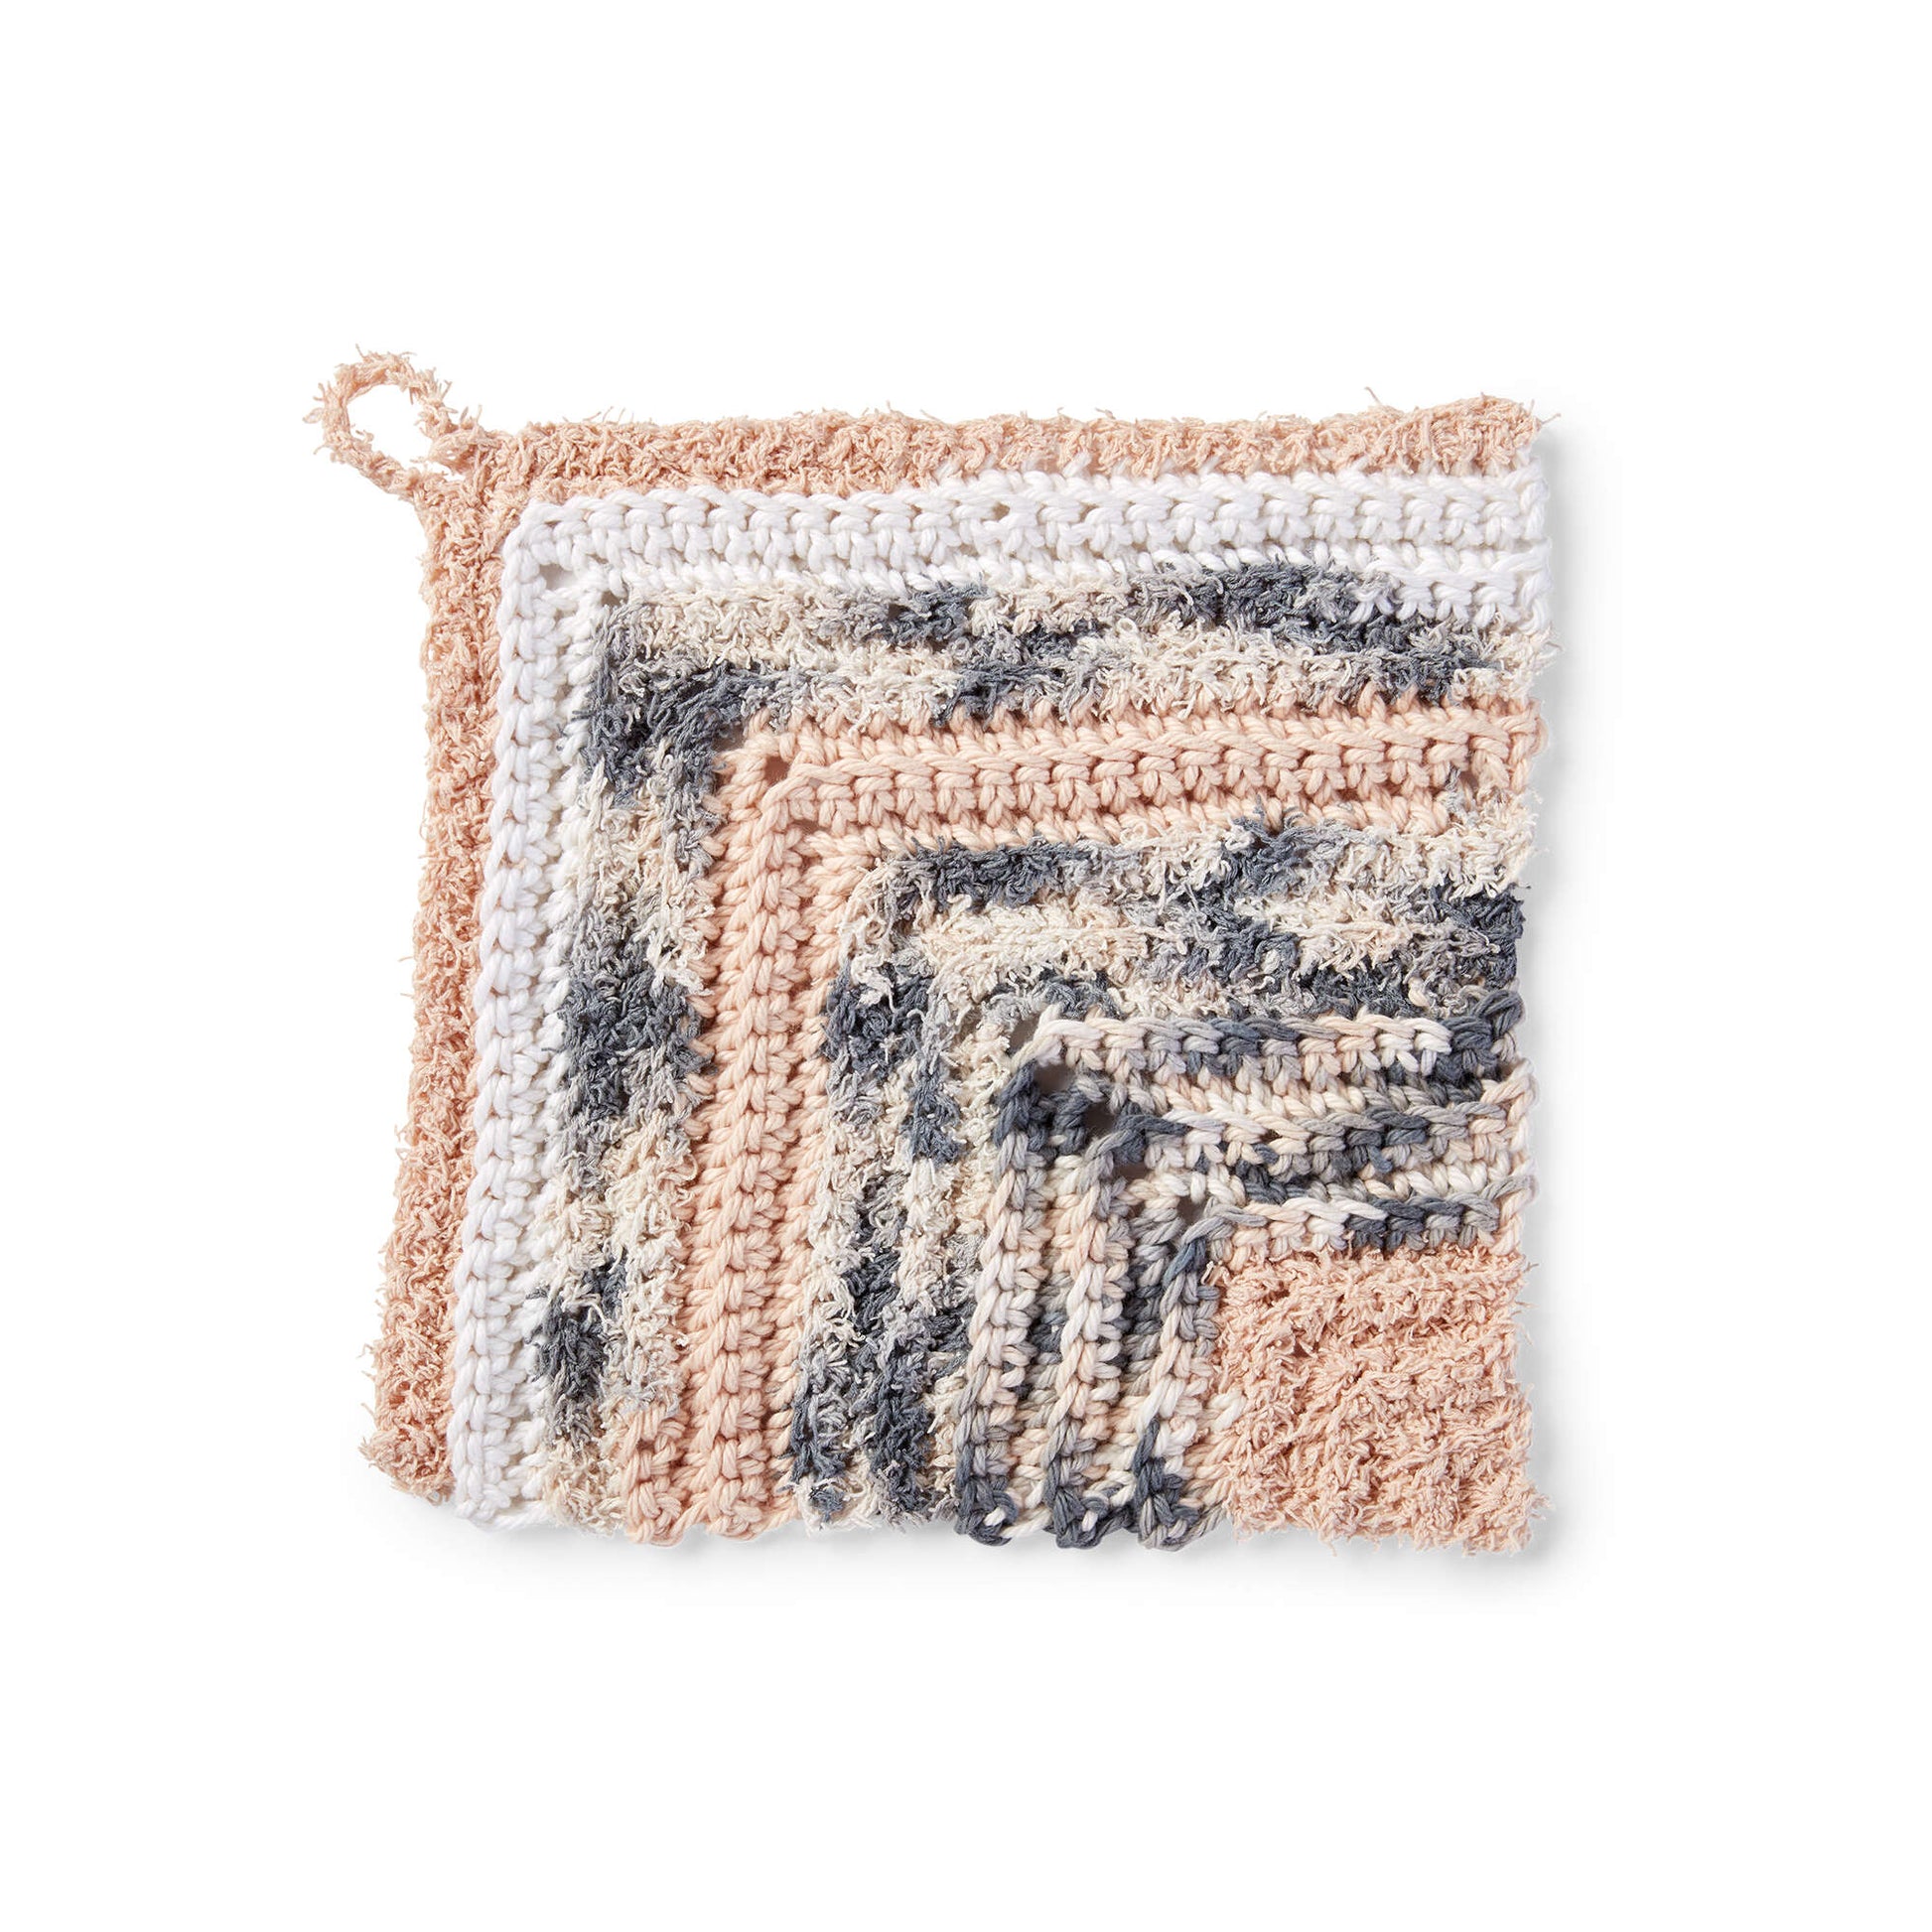 Free Lily Sugar'n Cream Scrubbing Miter Crochet Dishcloth Pattern